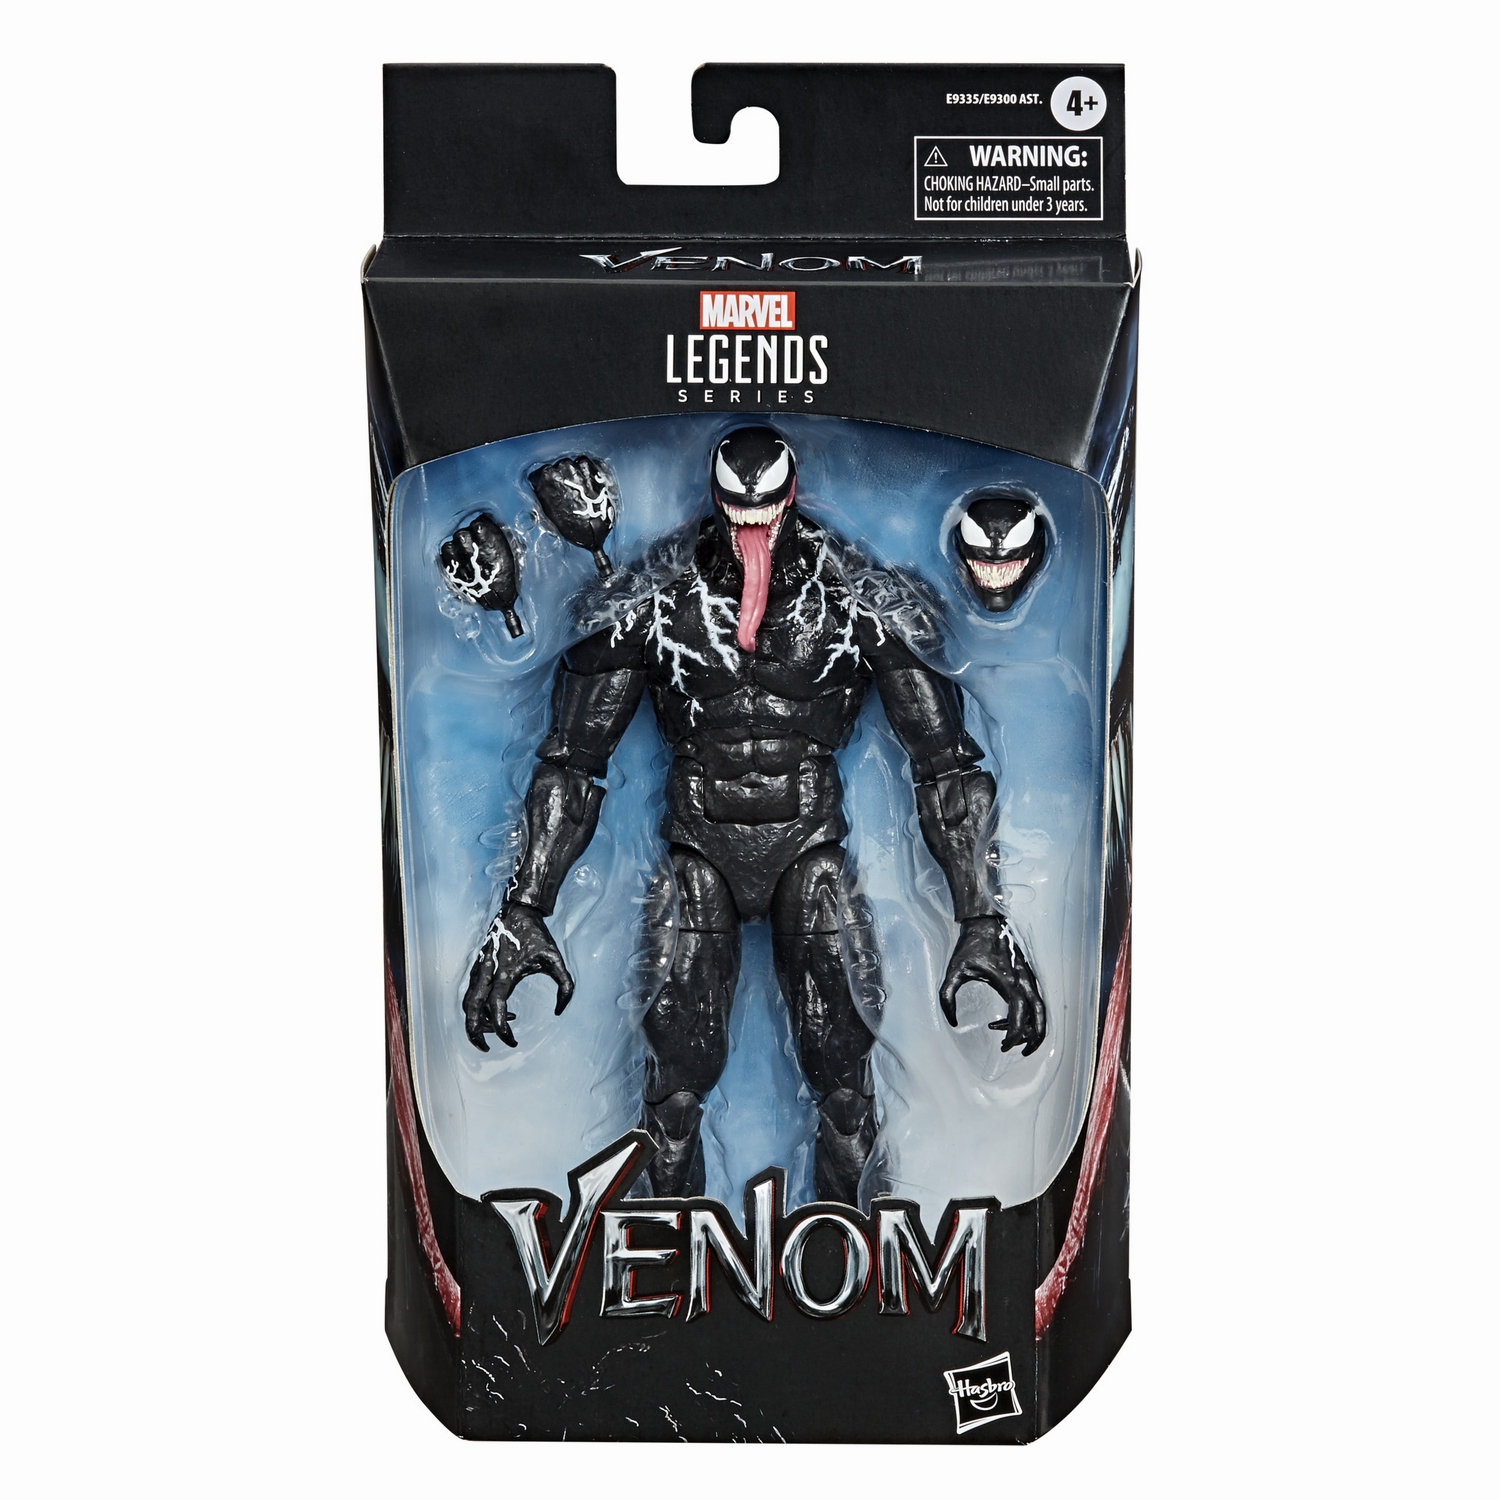 MARVEL LEGENDS SERIES 6-INCH VENOM Figure Assortment - Venom (in pck).jpg